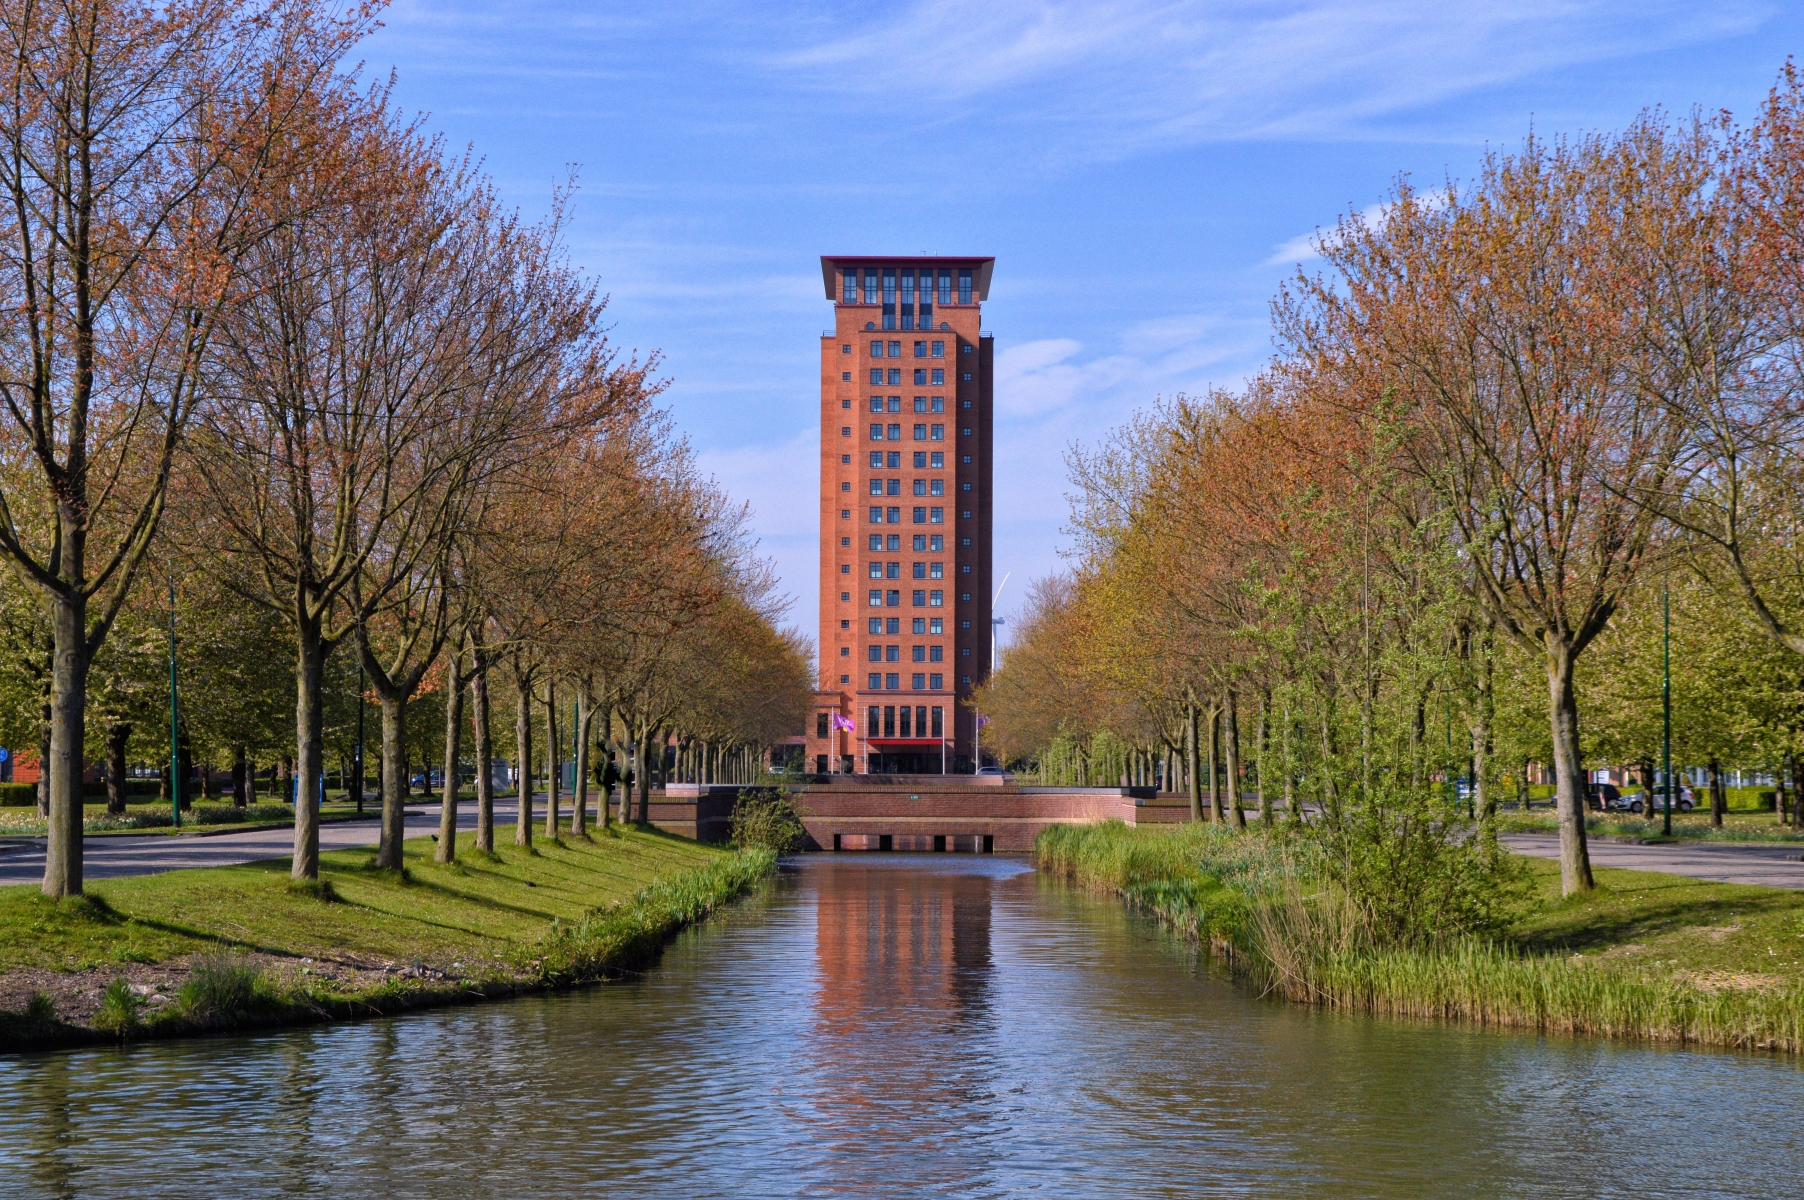 Van der Valk Hotel Houten - Utrecht <br/>97.50 ew <br/> <a href='http://vakantieoplossing.nl/outpage/?id=7f21a2798804fdc52c22f290646941b9' target='_blank'>View Details</a>